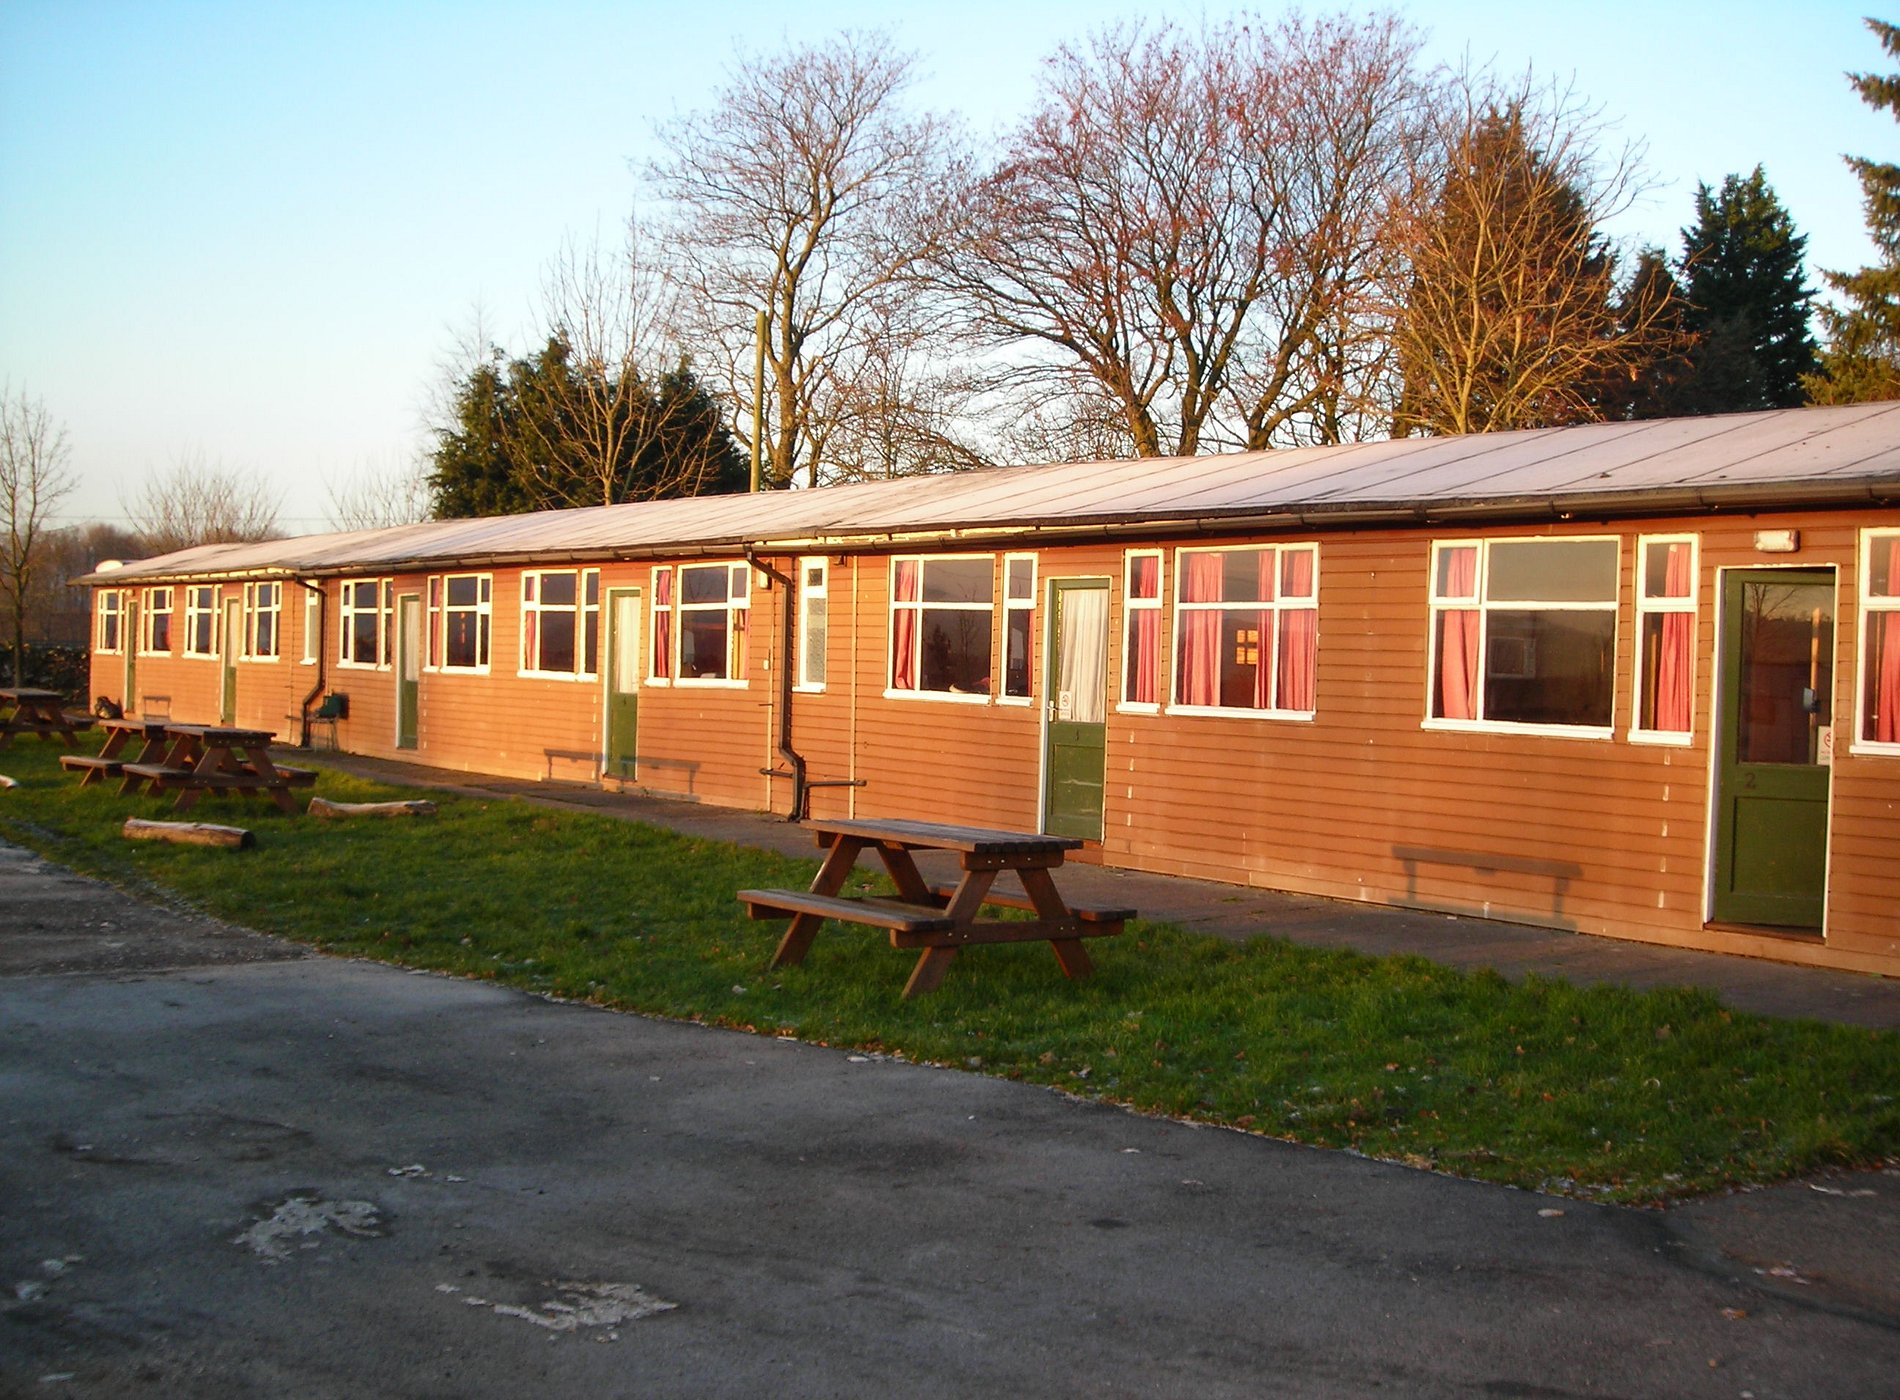 The Dalesbridge Campsite and Cabins image